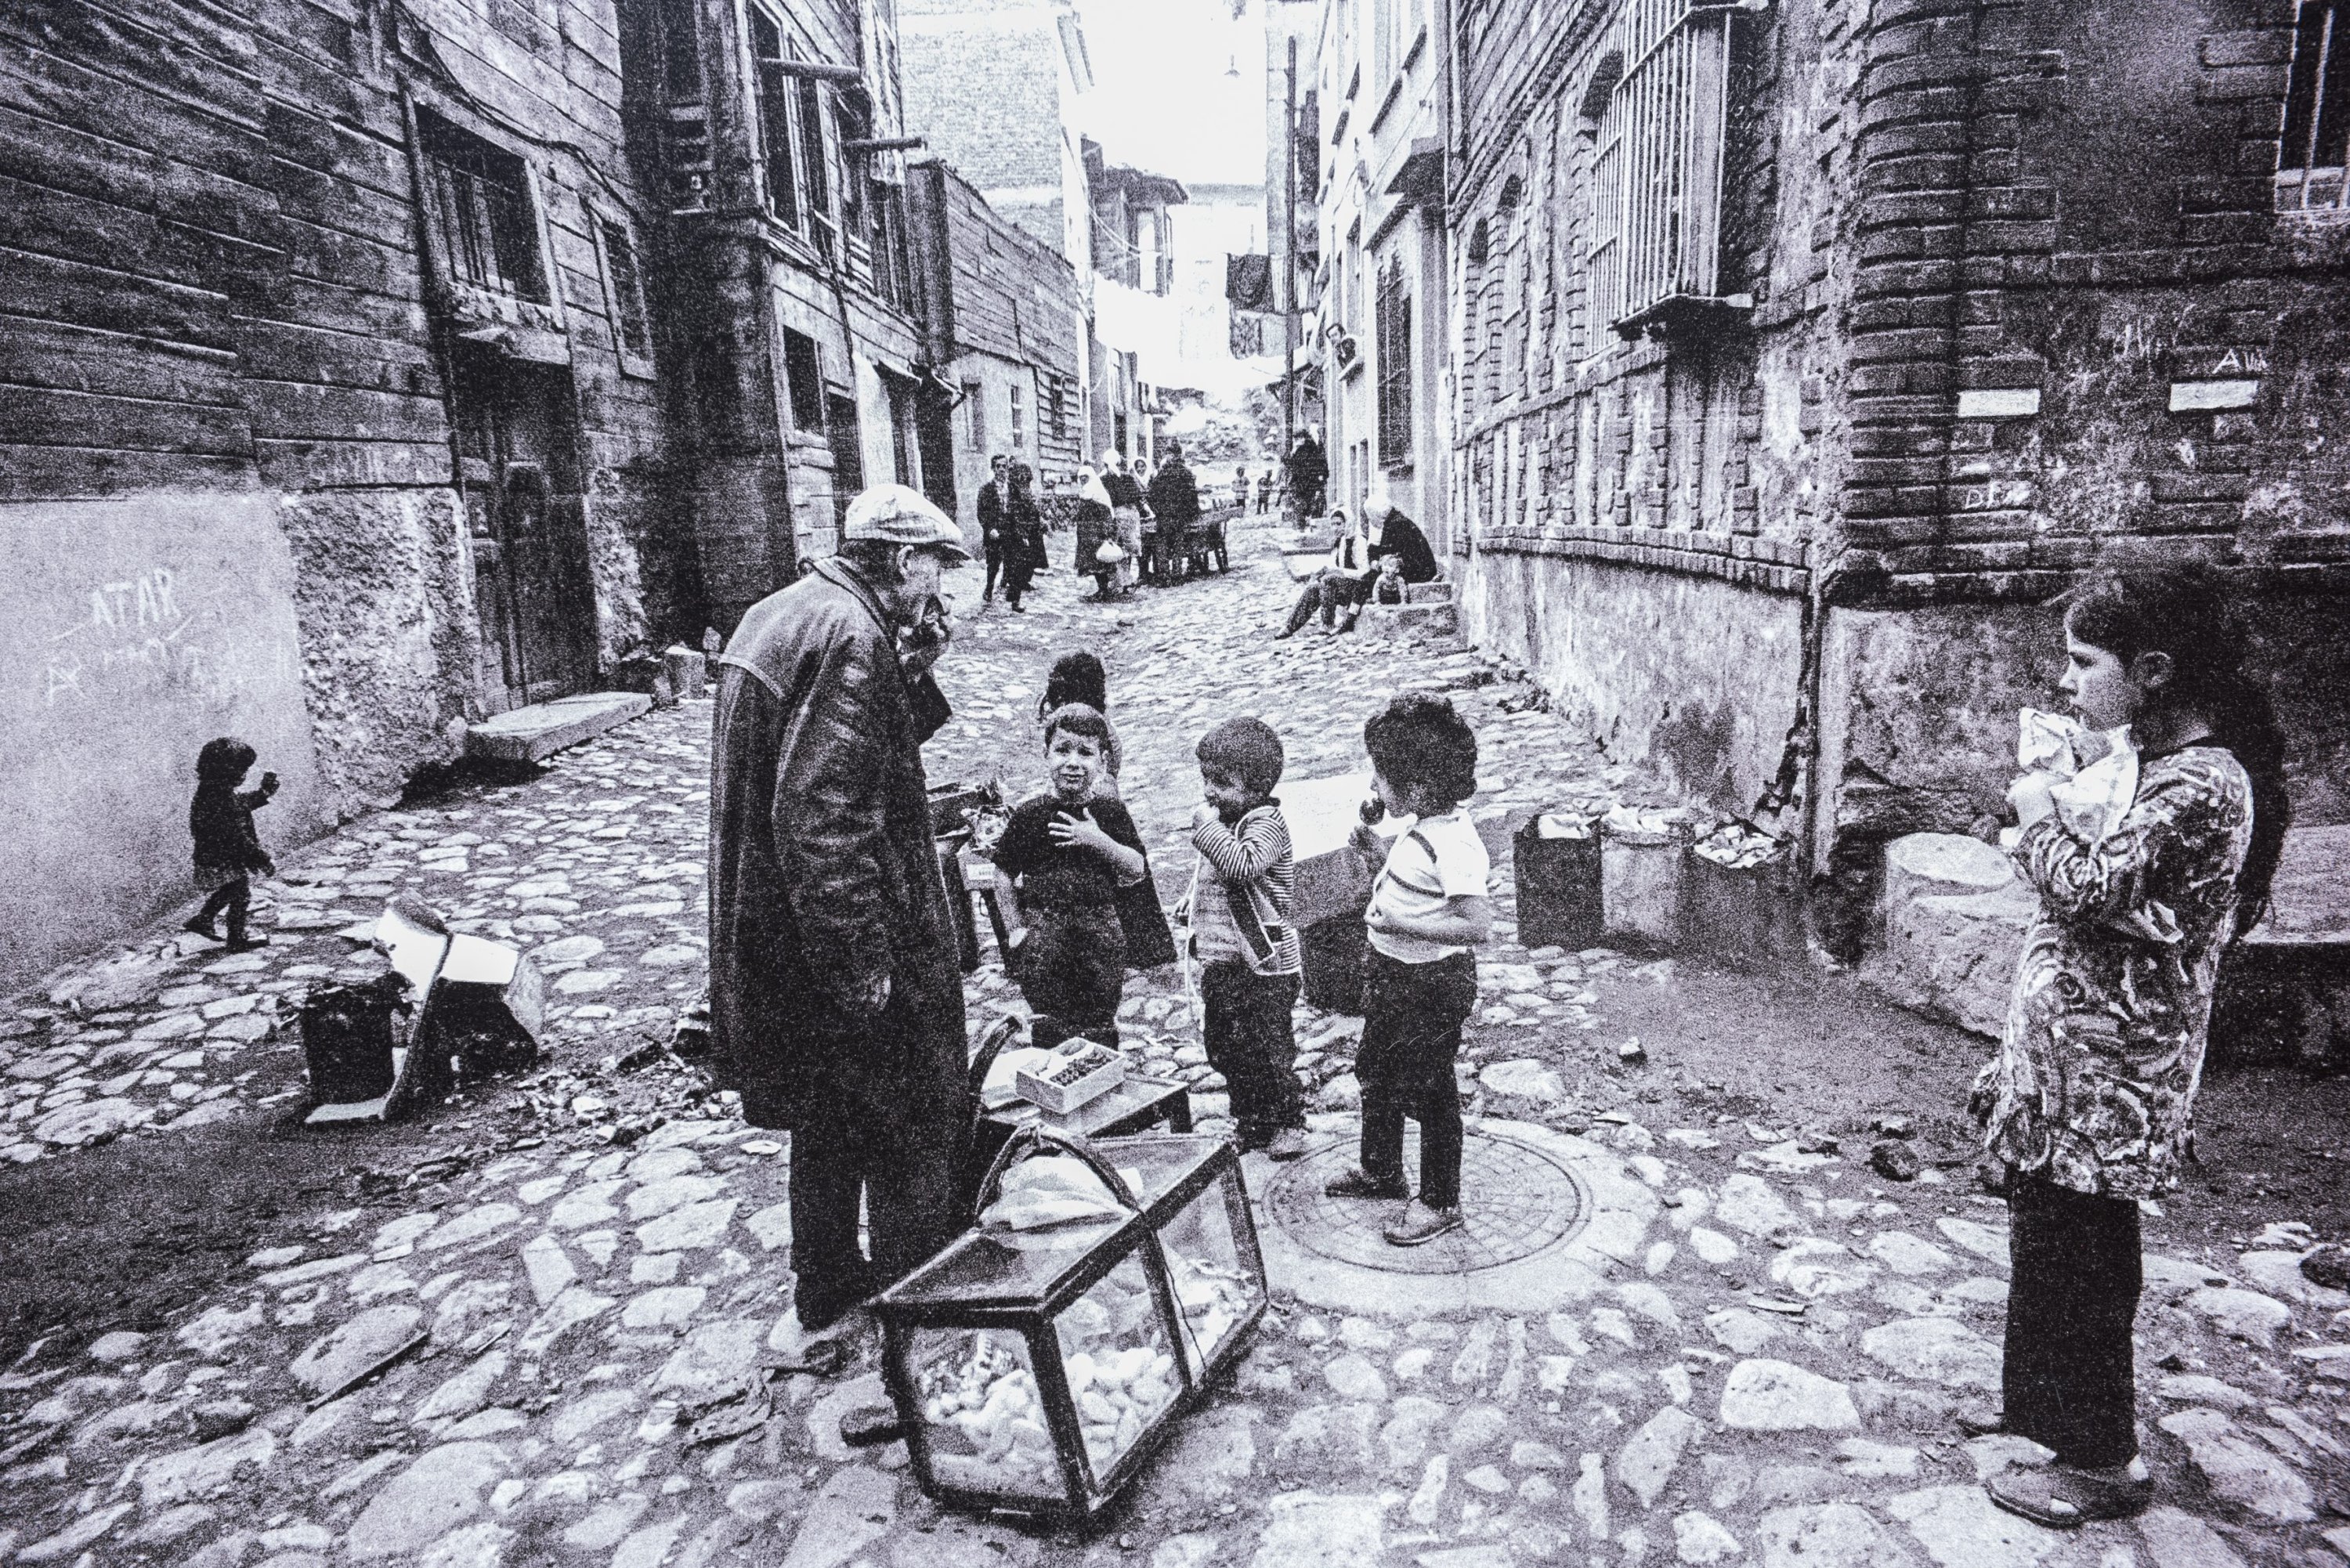 A work by Ara Güler in the 'Kayıp Istanbul' ('Lost Istanbul') exhibit was photographed by Yağmur Dinç on Oct. 10, 2015.